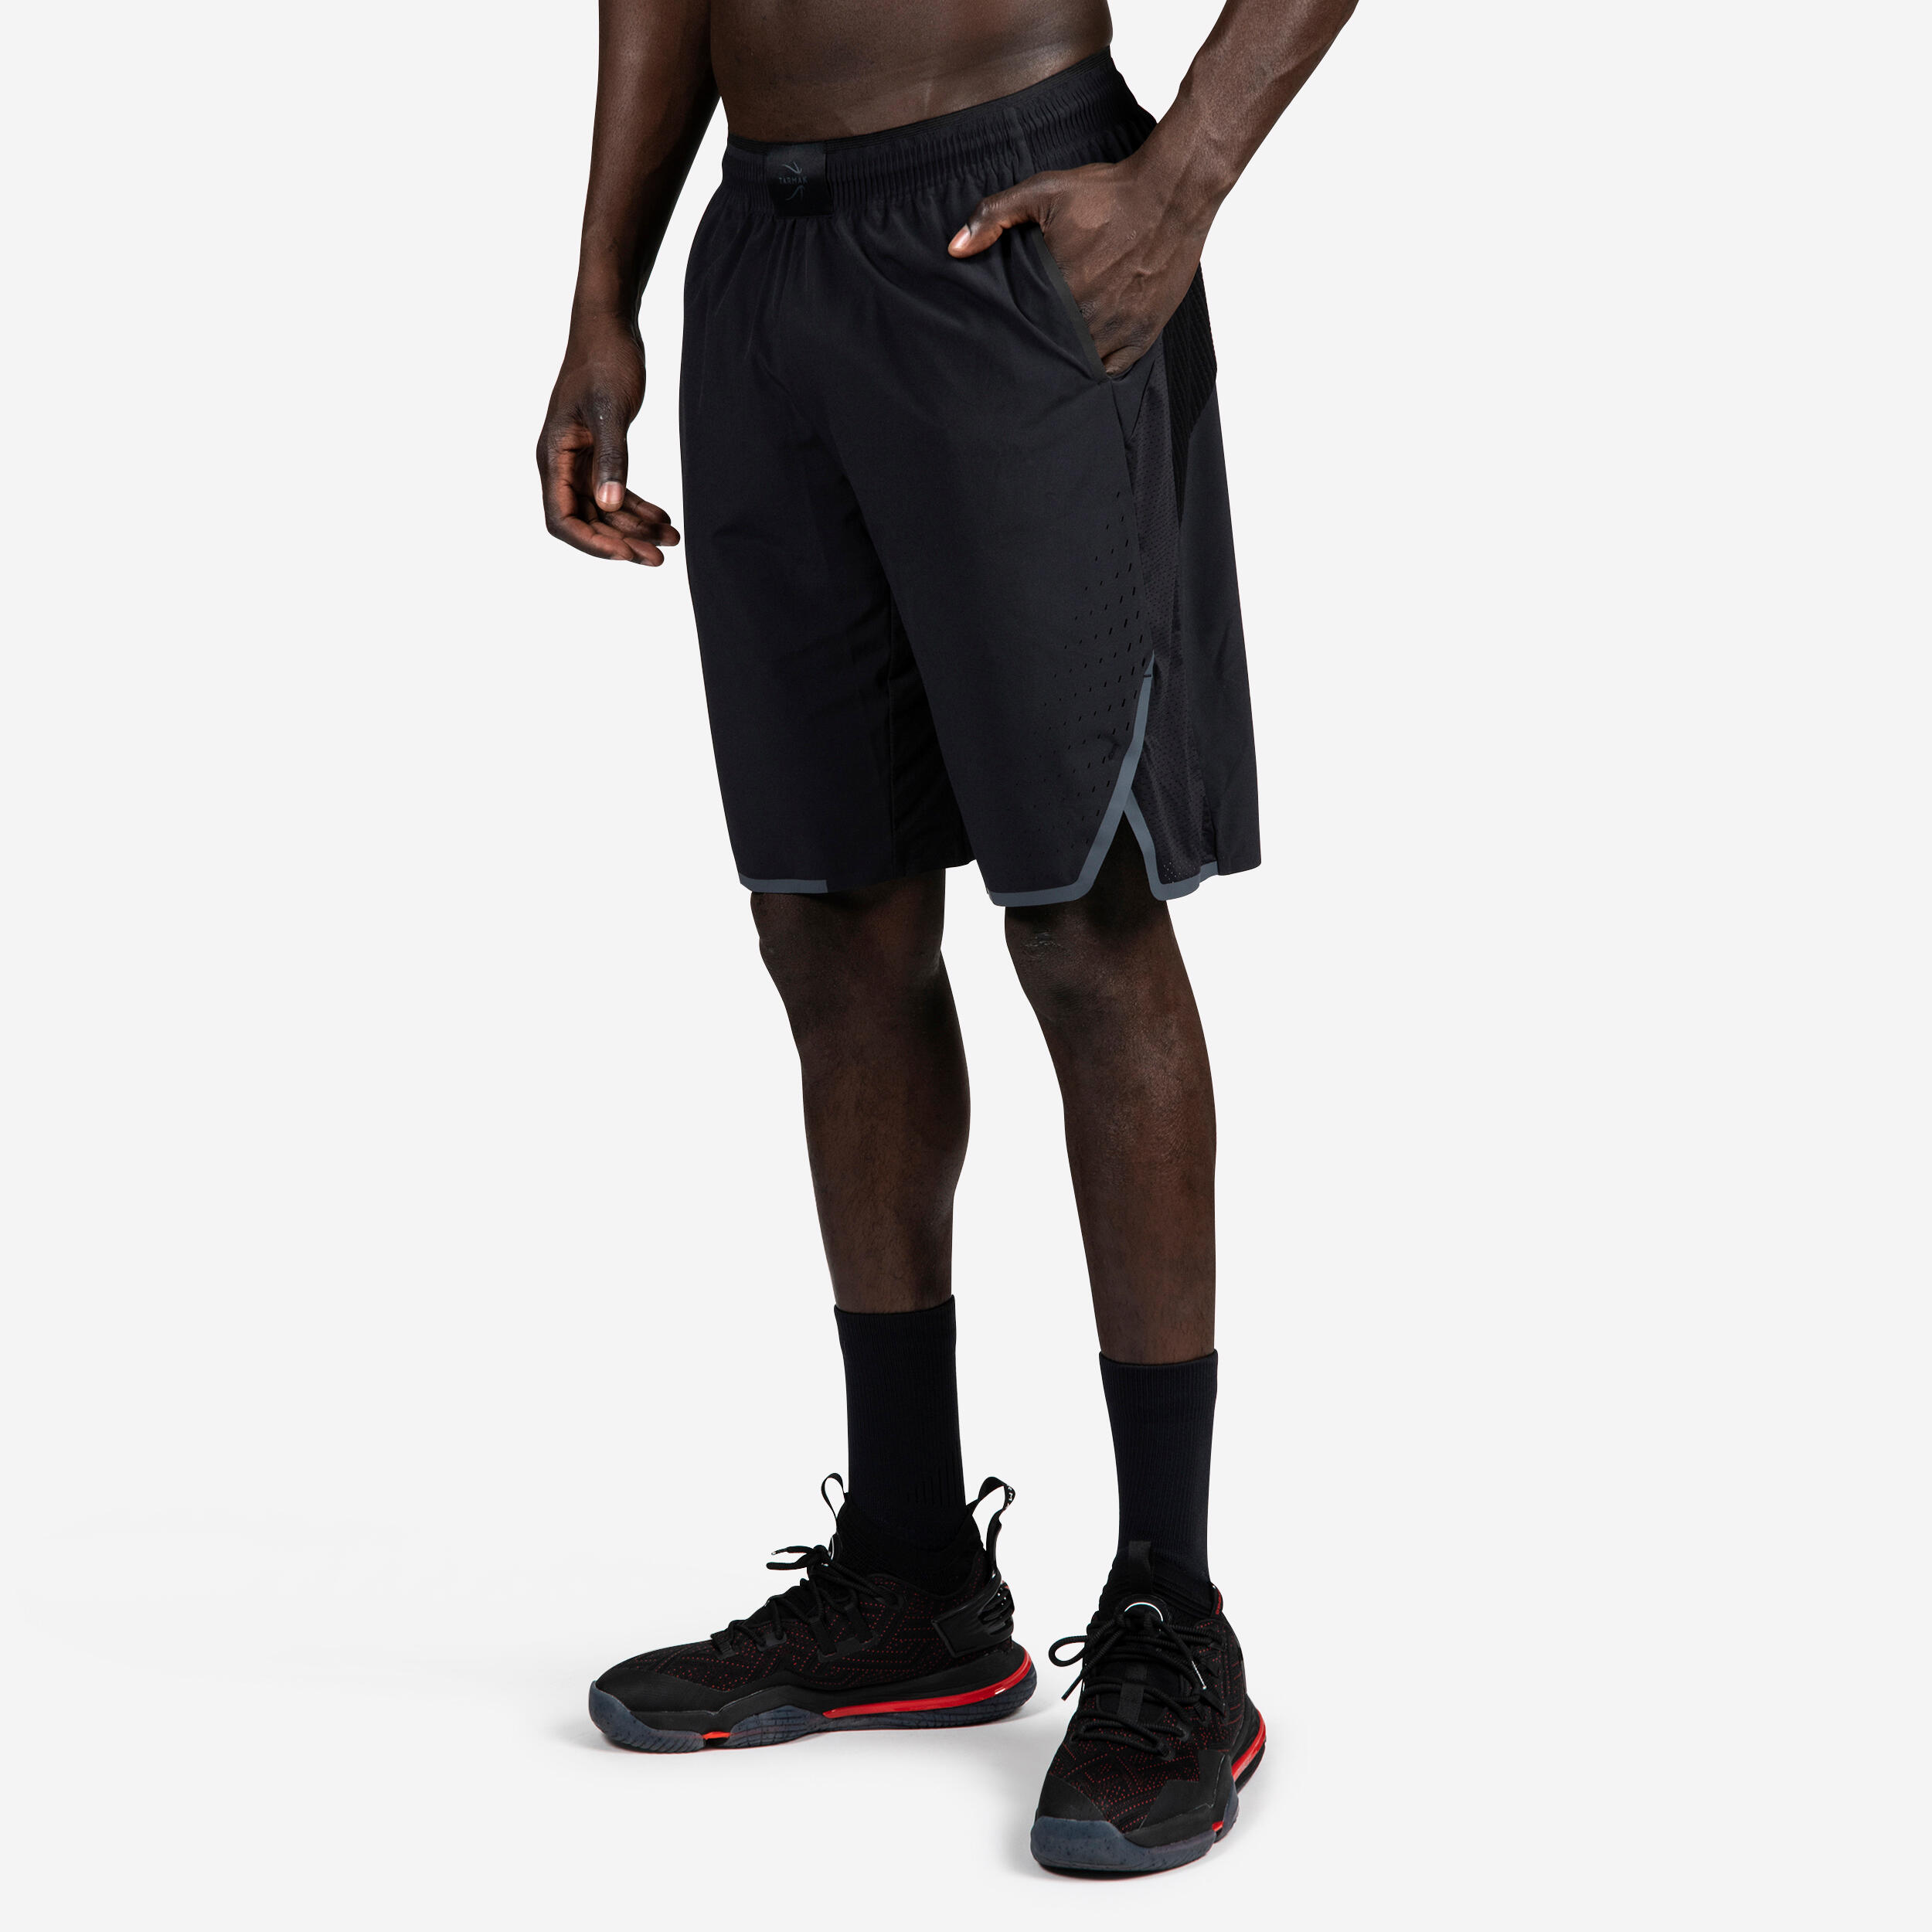 Men's Basketball Shorts SH900 - Black 1/5